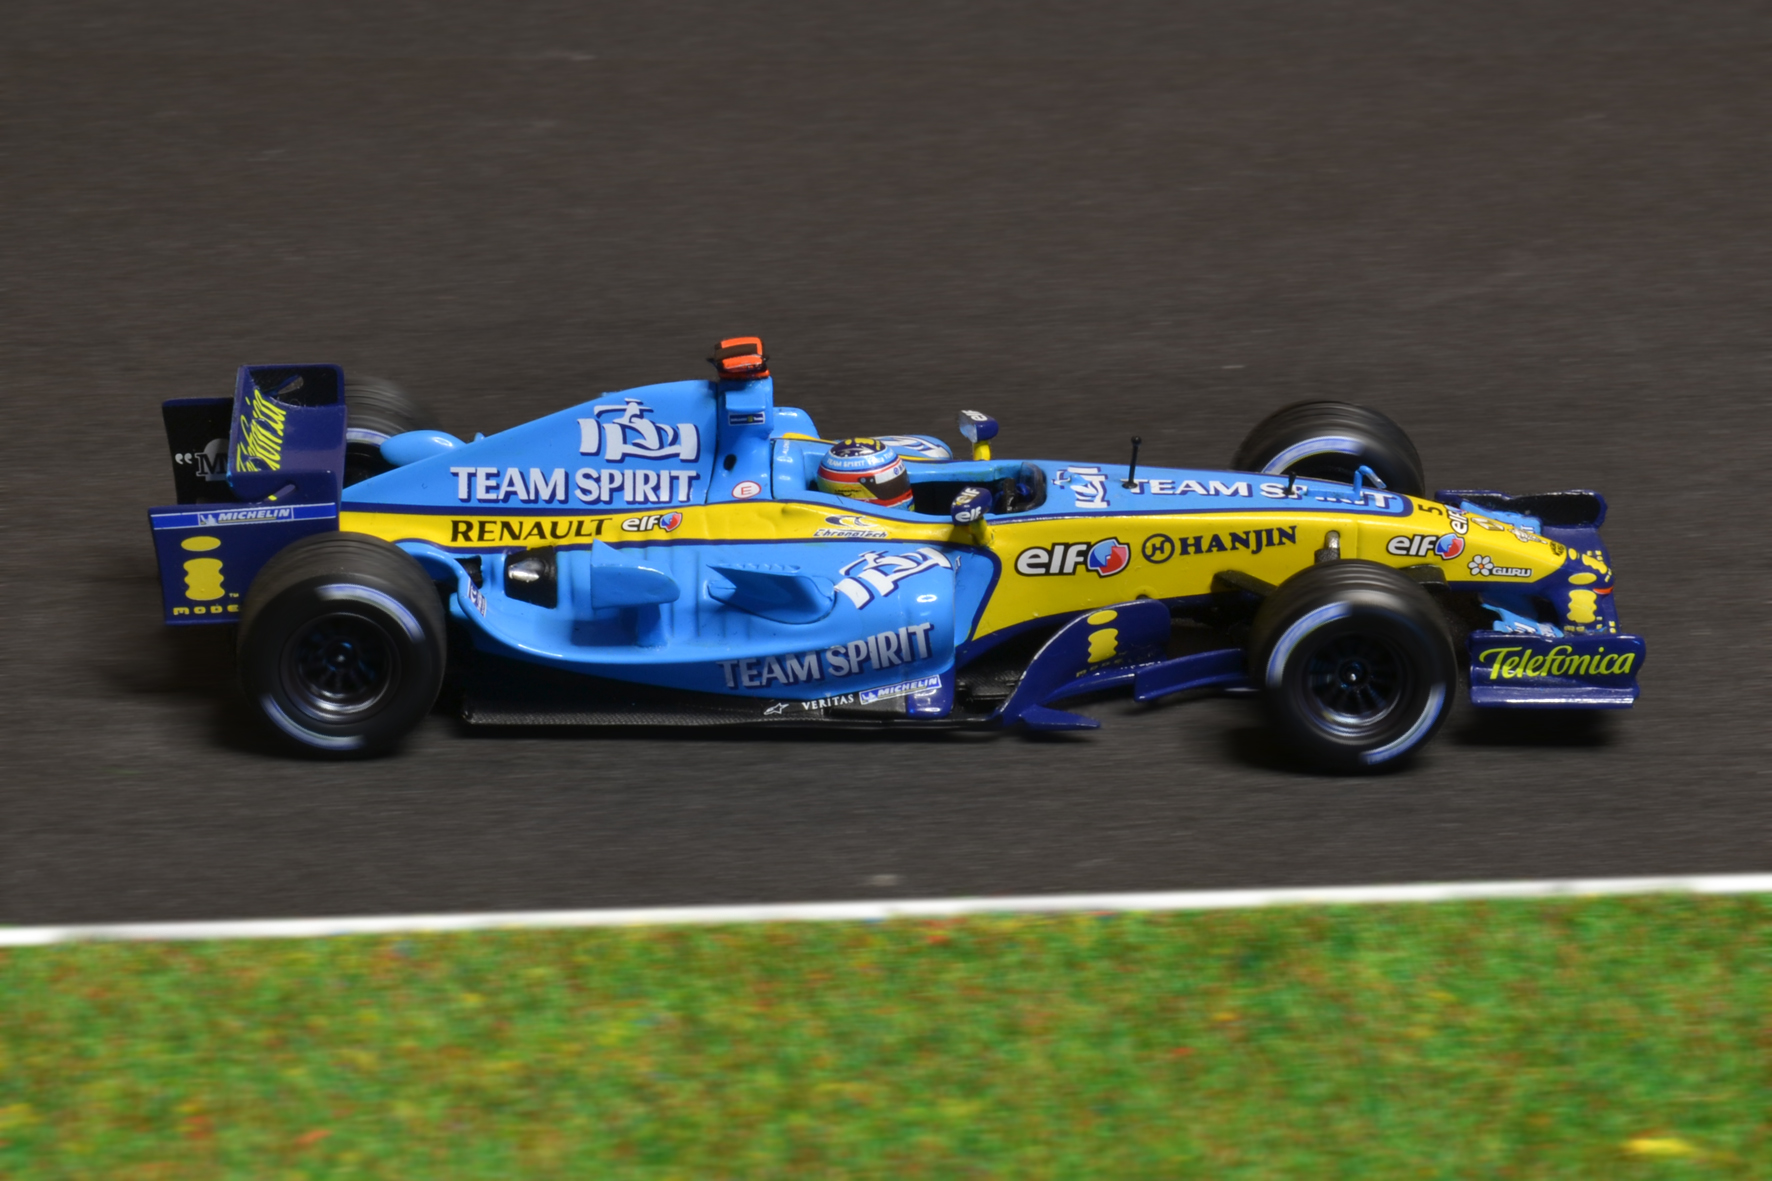 Renault R25 Fernando Alonso 2005 - Minichamps 1:43